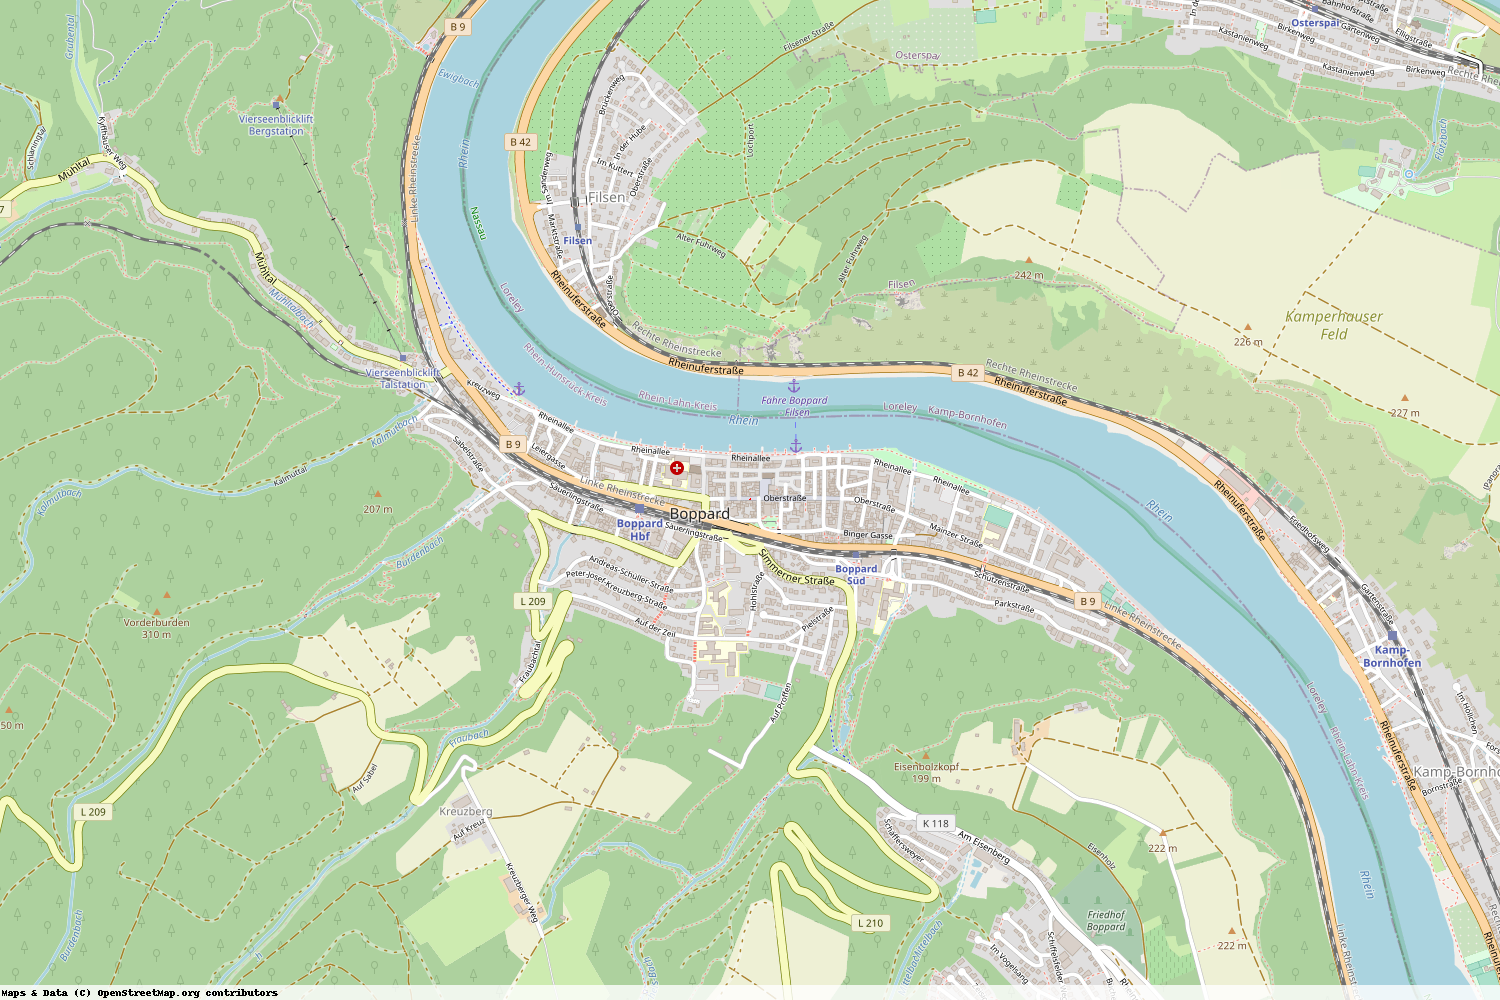 Ist gerade Stromausfall in Rheinland-Pfalz - Rhein-Hunsrück-Kreis - Boppard?